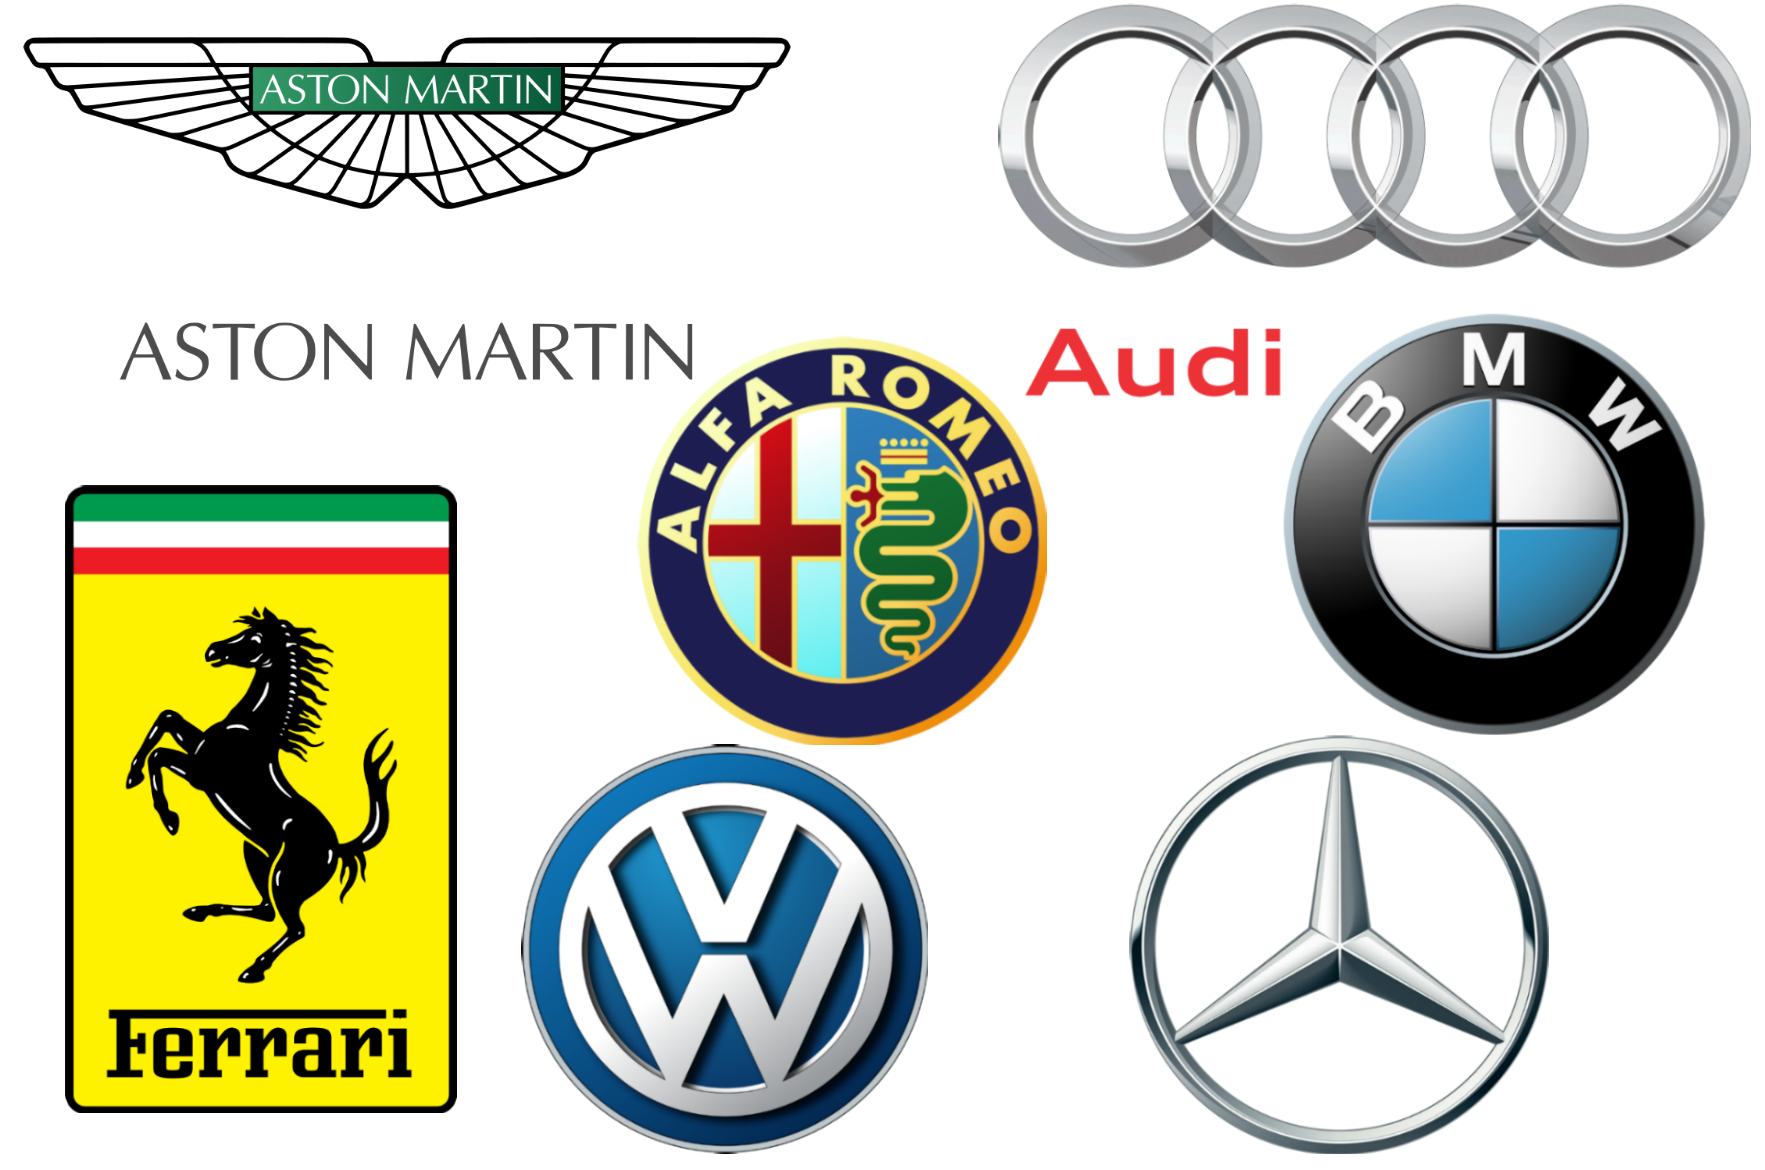 european car company logo 02